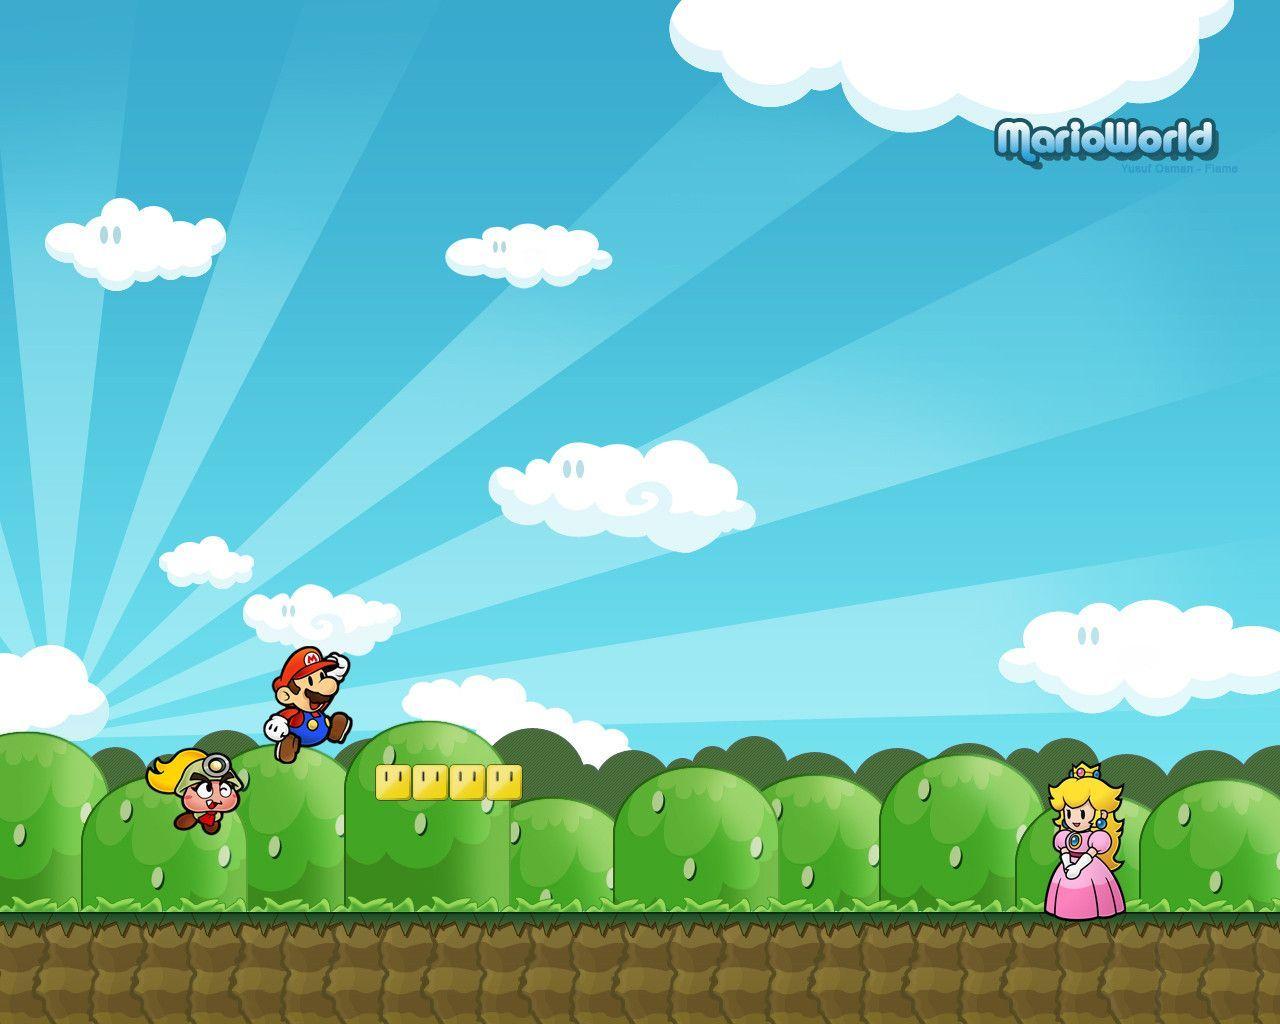 Super Mario Themes, Wallpaper, and Background Mario Luigi